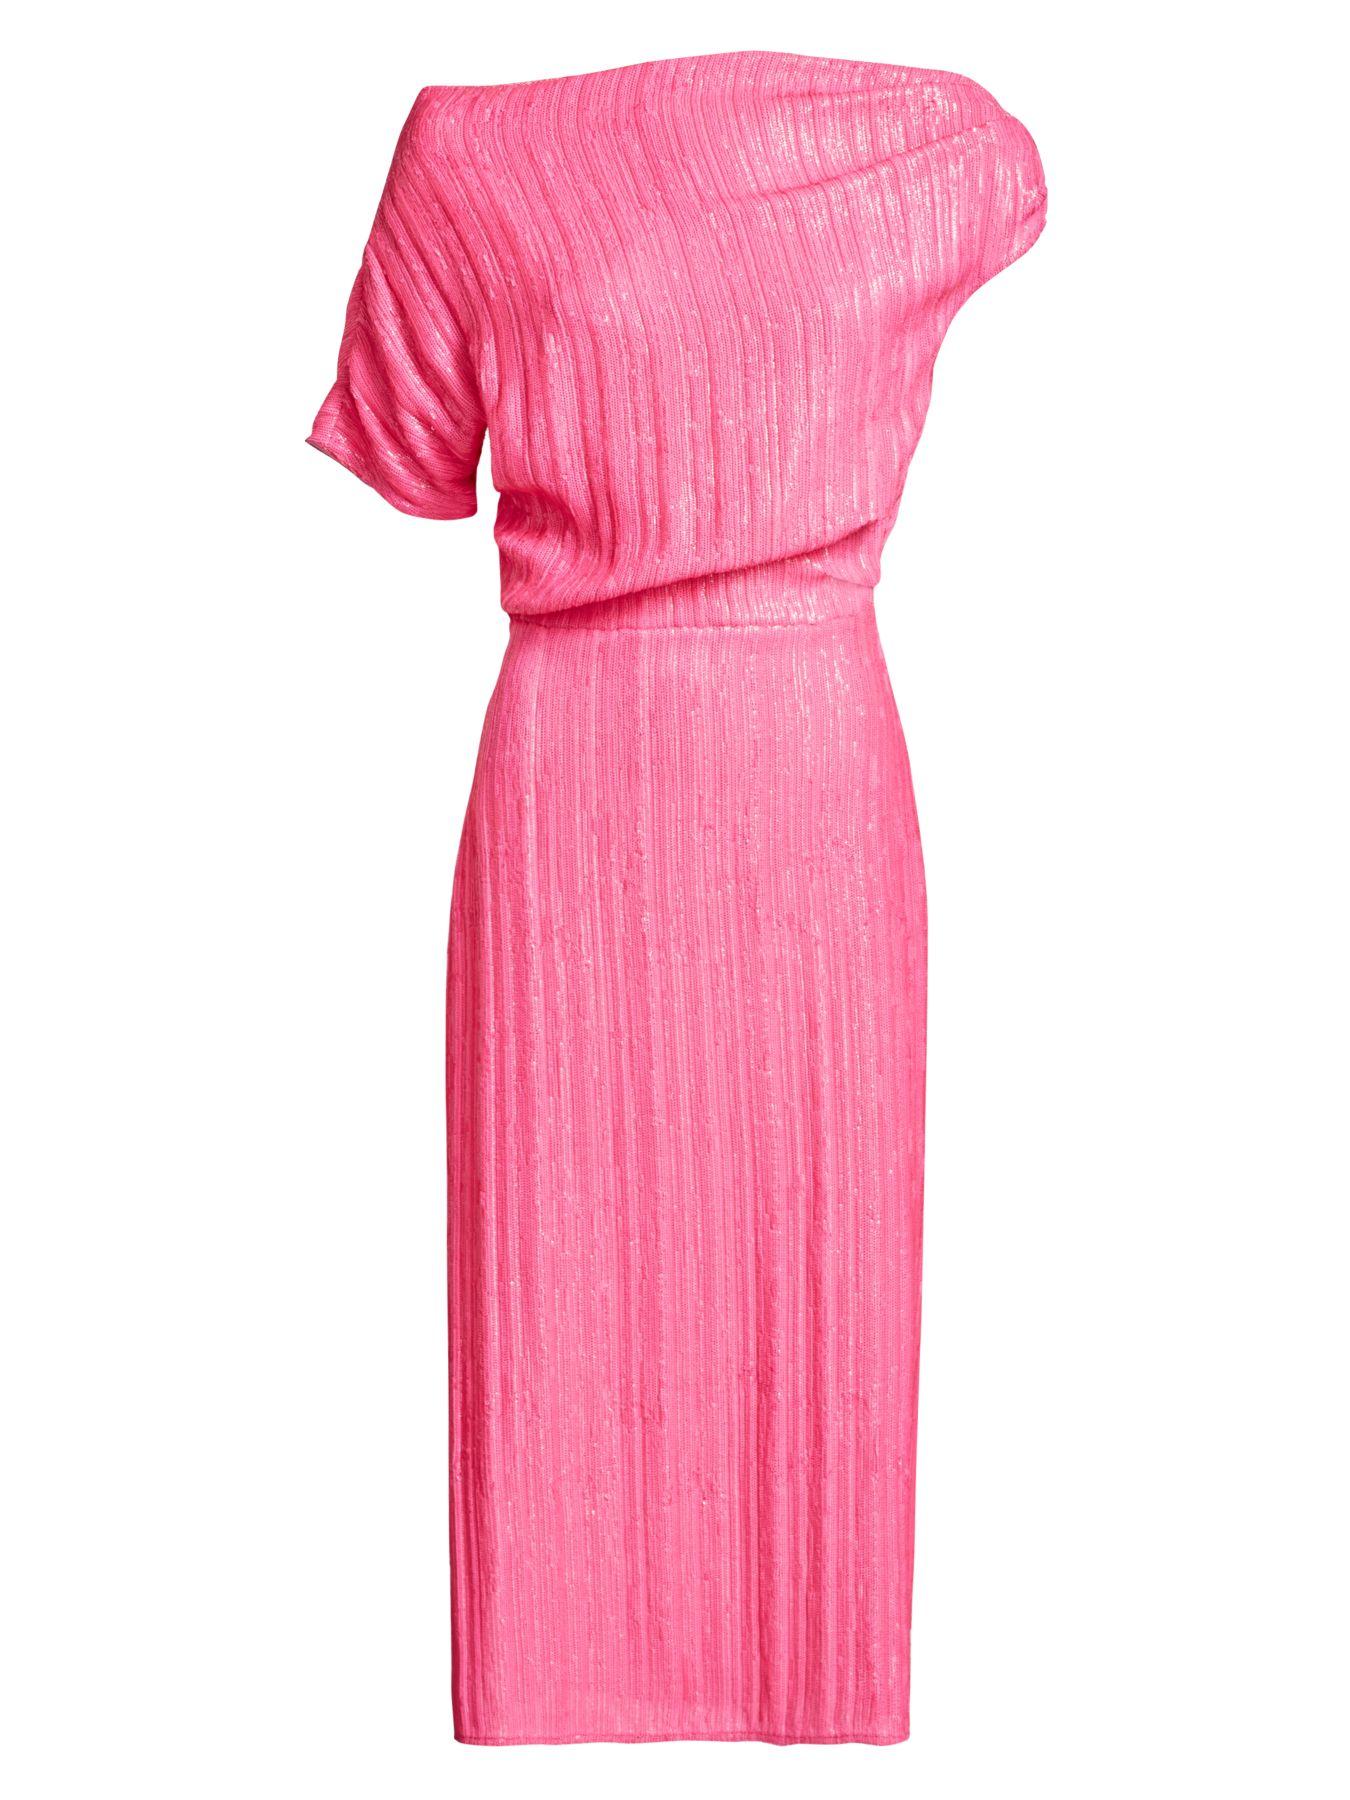 Rachel Comey Asti Sequin Blouson Midi Dress in Hot Pink (Pink) | Lyst